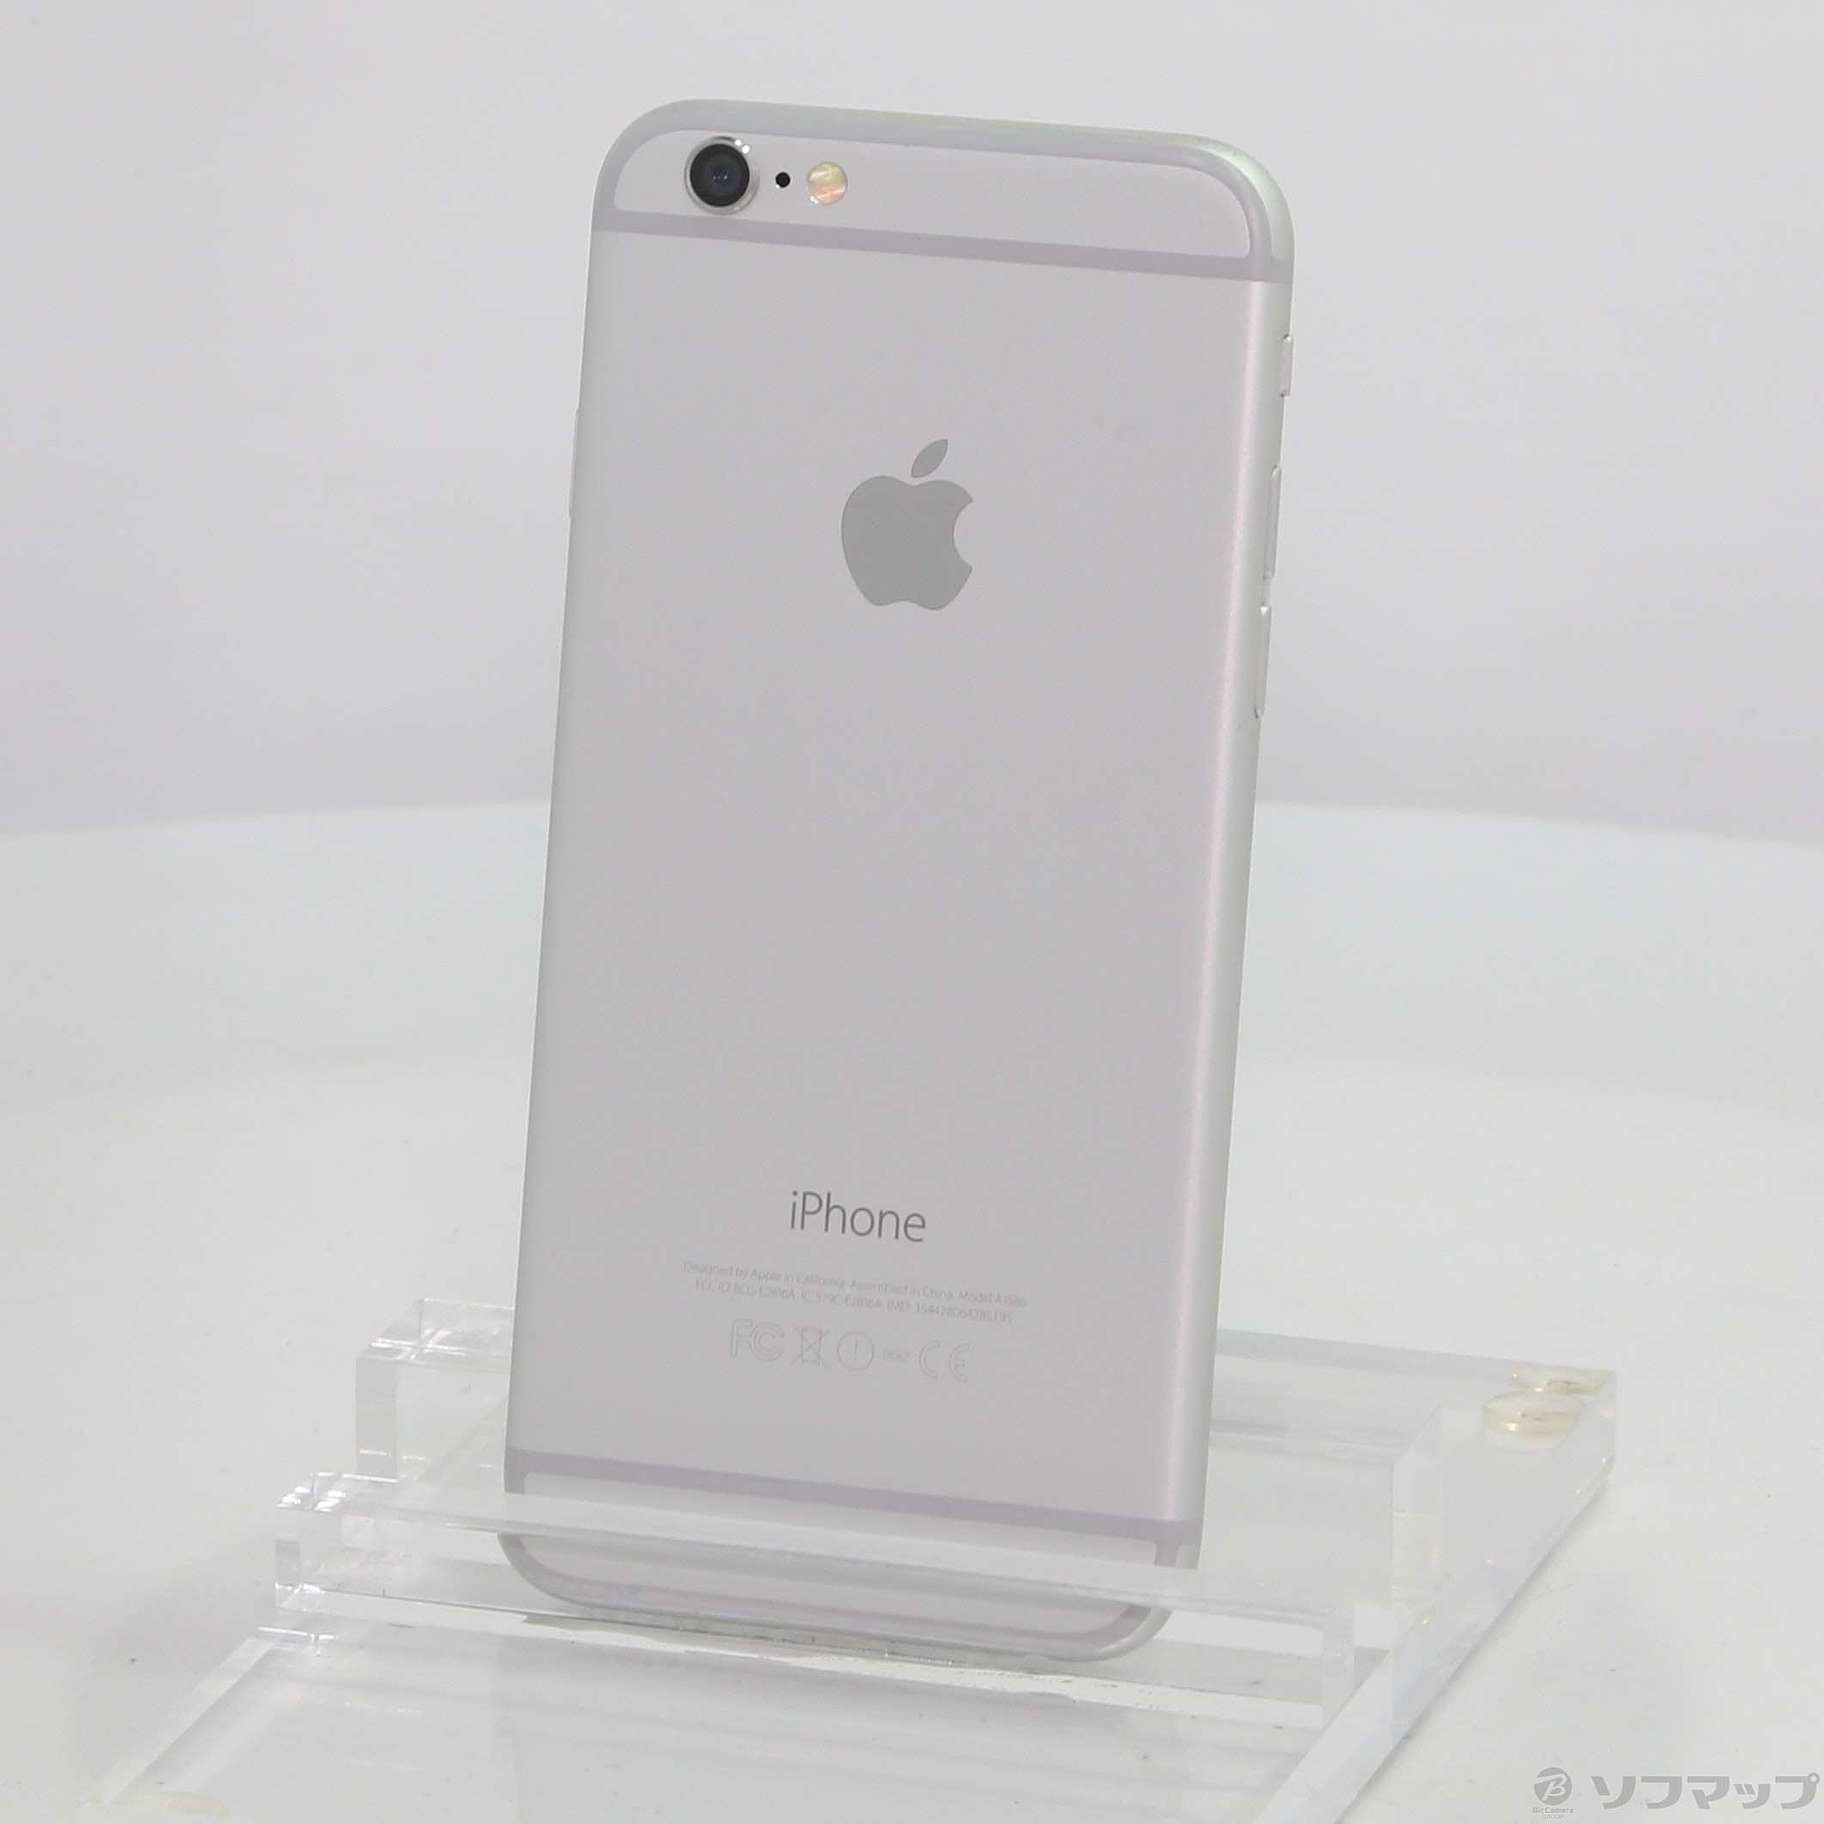 iPhone Silver 16 GB Softbank